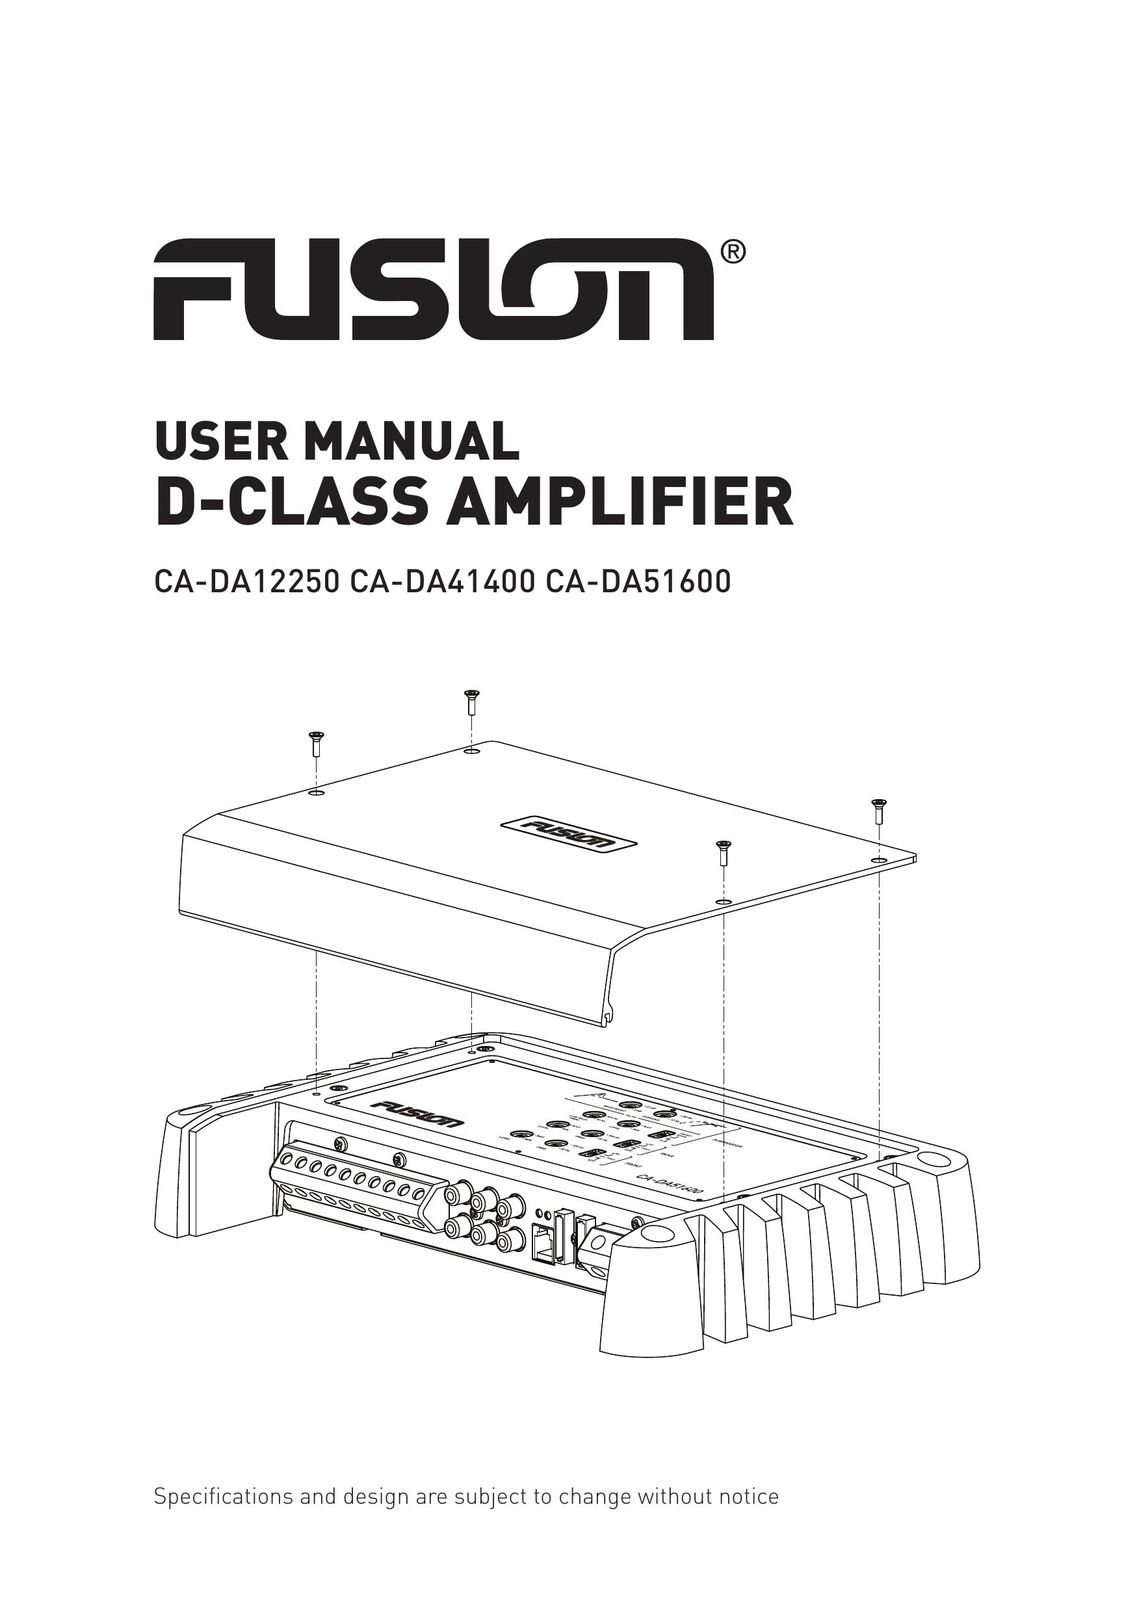 Fusion CA-DA51600 Car Amplifier User Manual